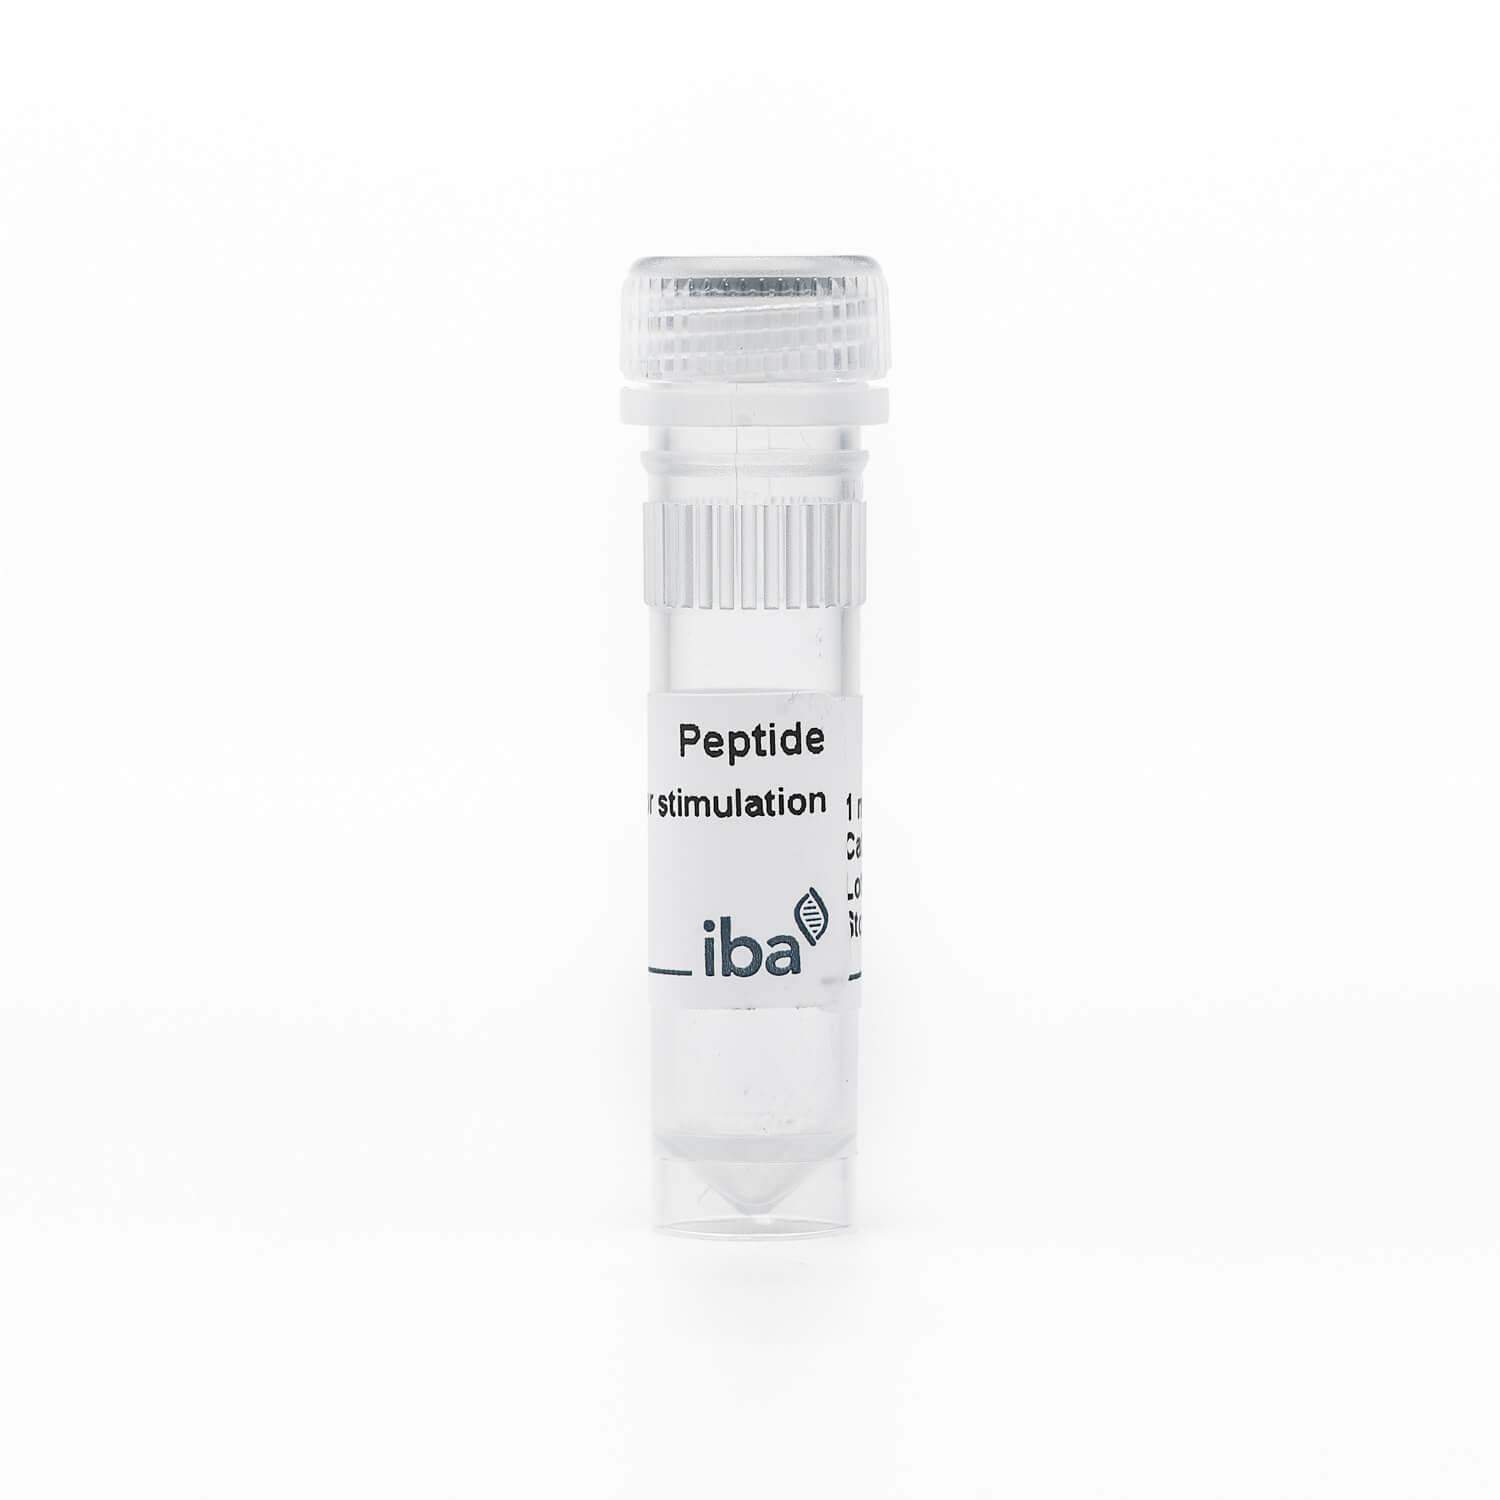 Influenza M peptide GILGFVFTL (HLA-A*0201)